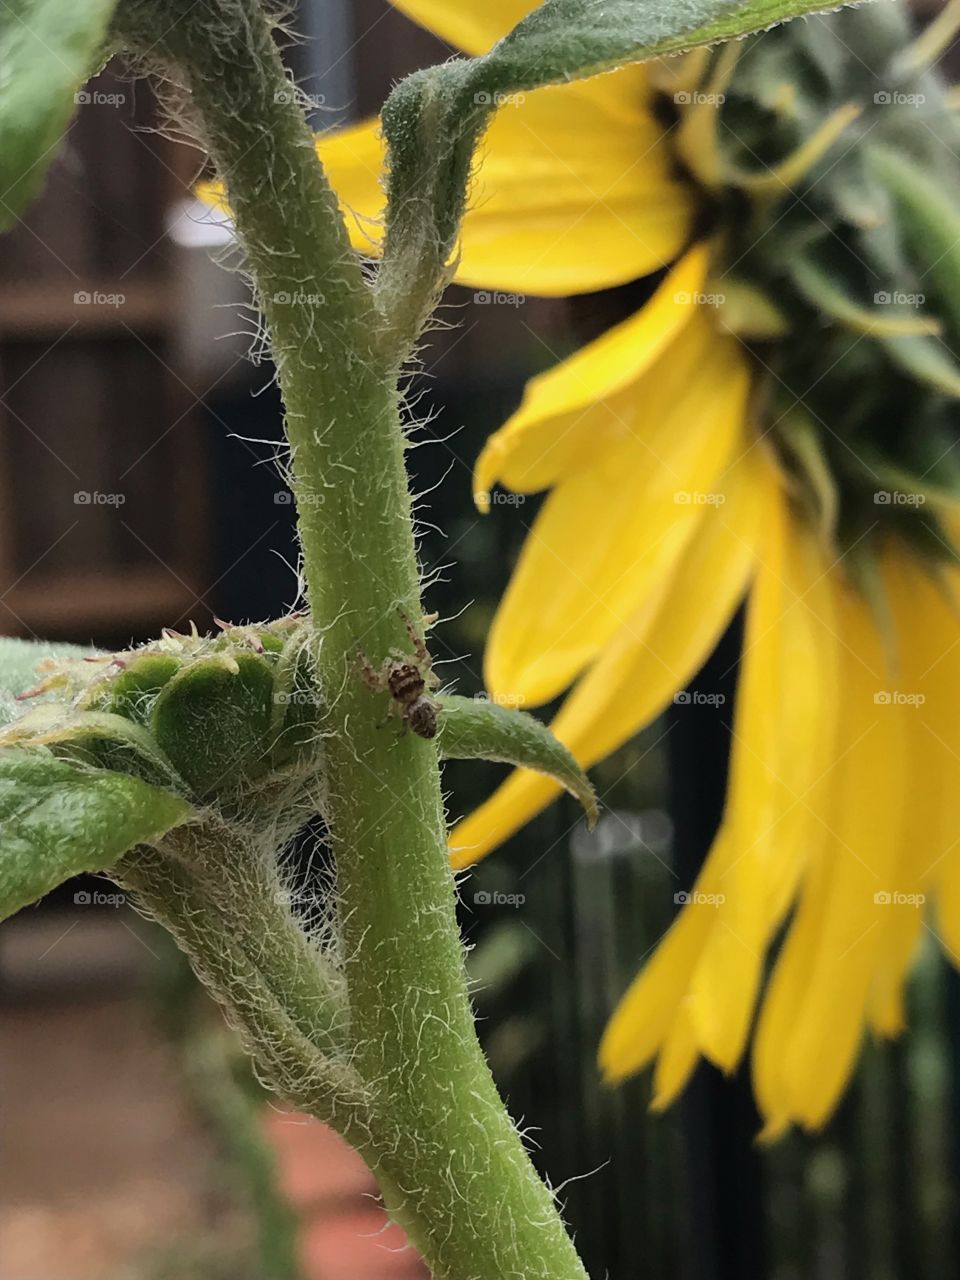 Tiny Spider on Green Sunflower Stem